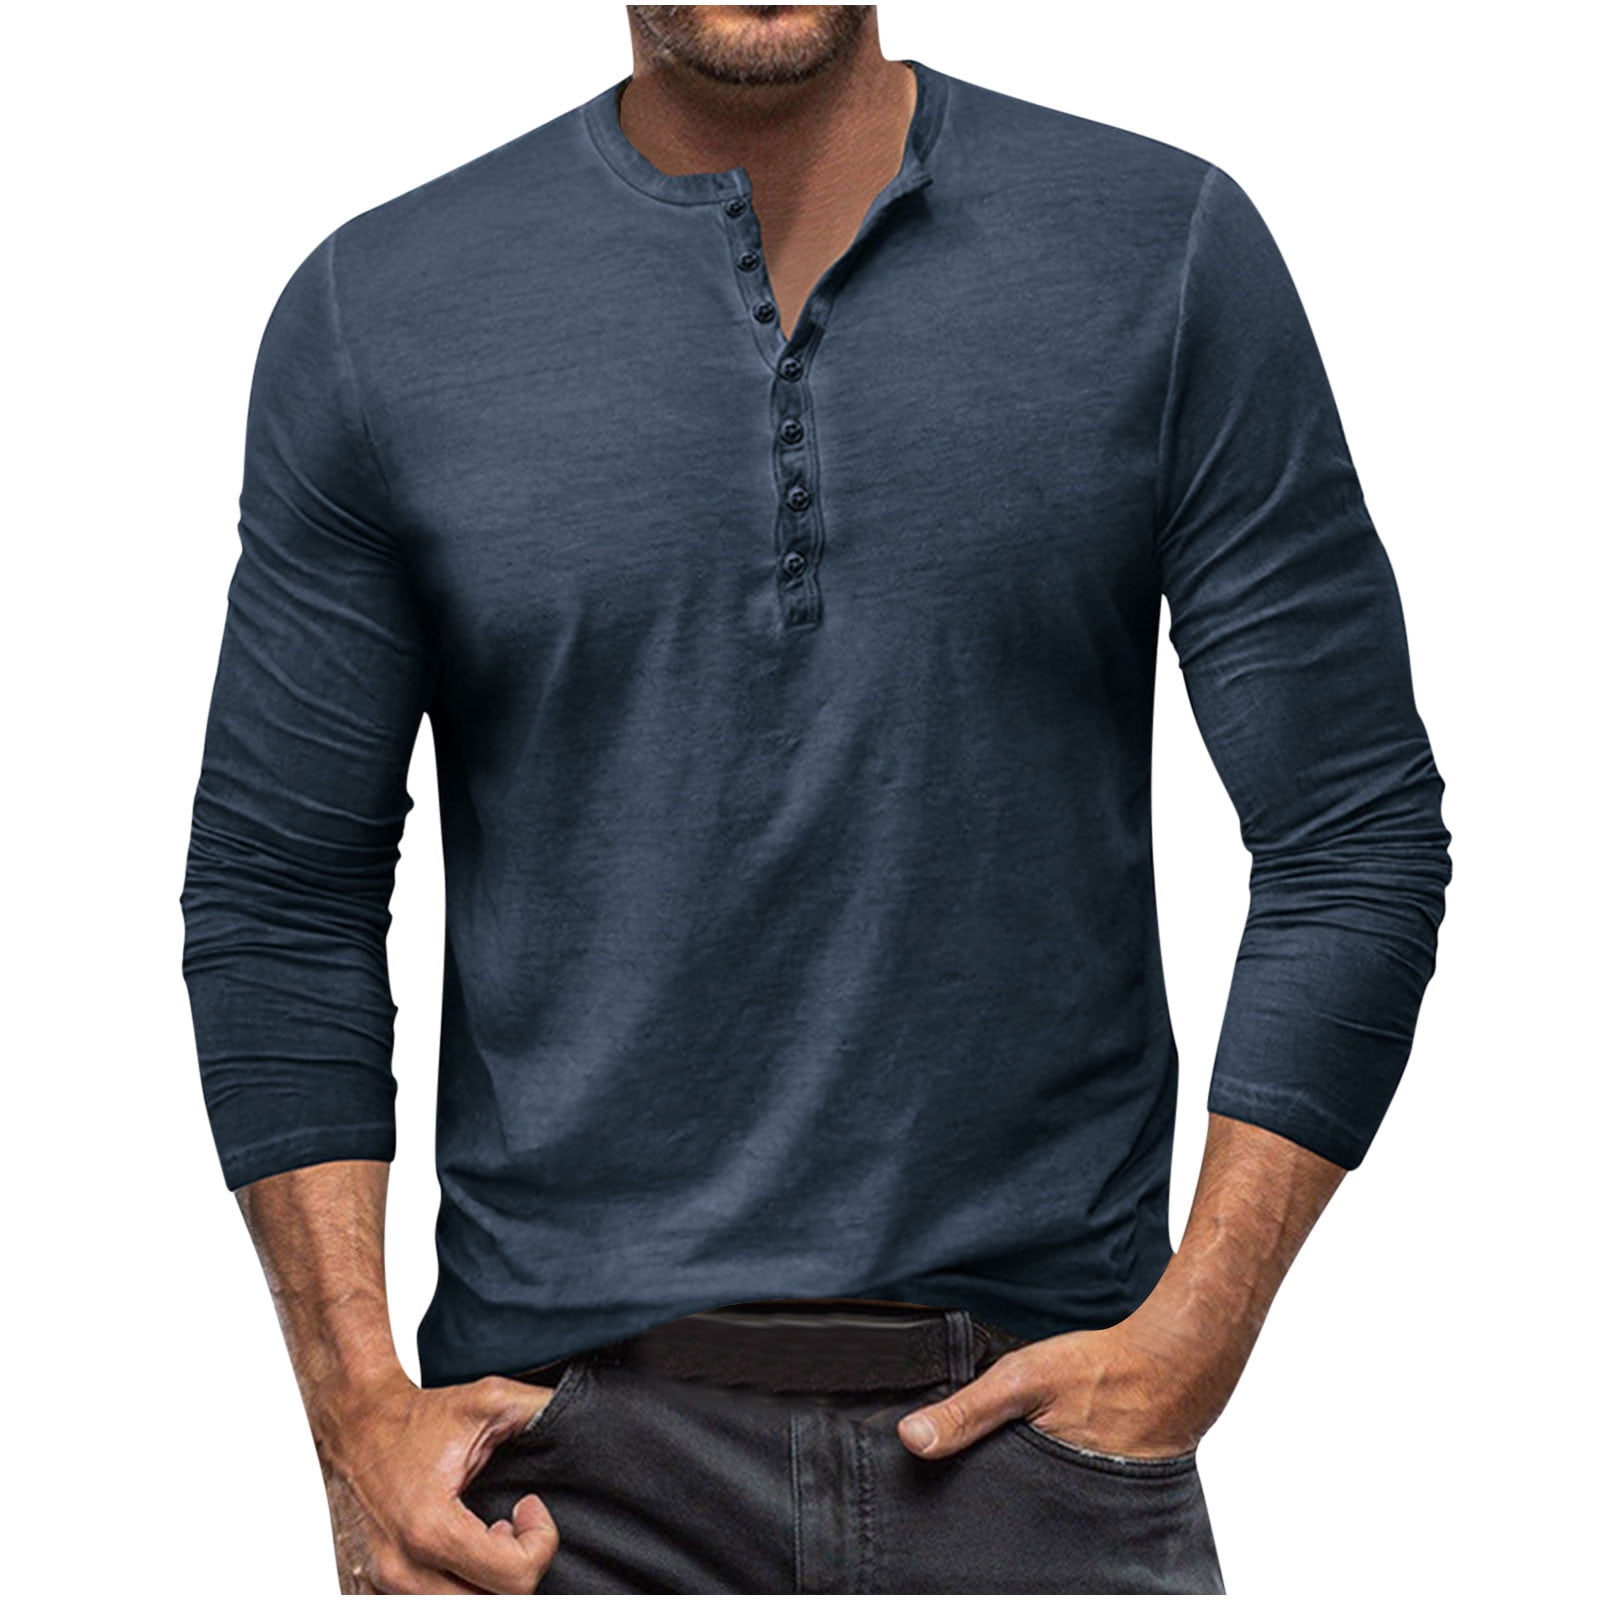 RYRJJ Mens Henley Shirts Long Sleeve T Shirt Fashion Casual Slim